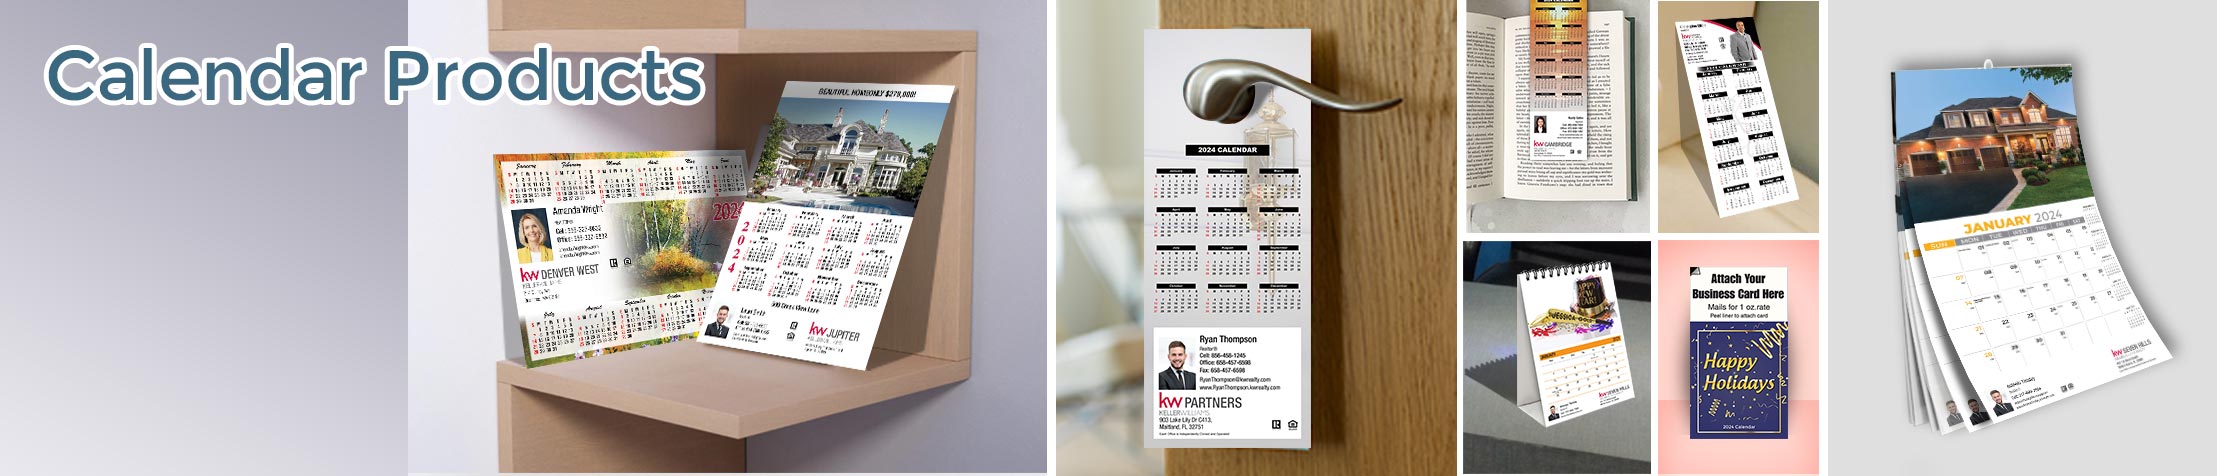 Keller Williams Real Estate Calendar Products - KW approved vendor 2019 calendars, magnets, door hangers, bookmarks, tear away note pads | BestPrintBuy.com